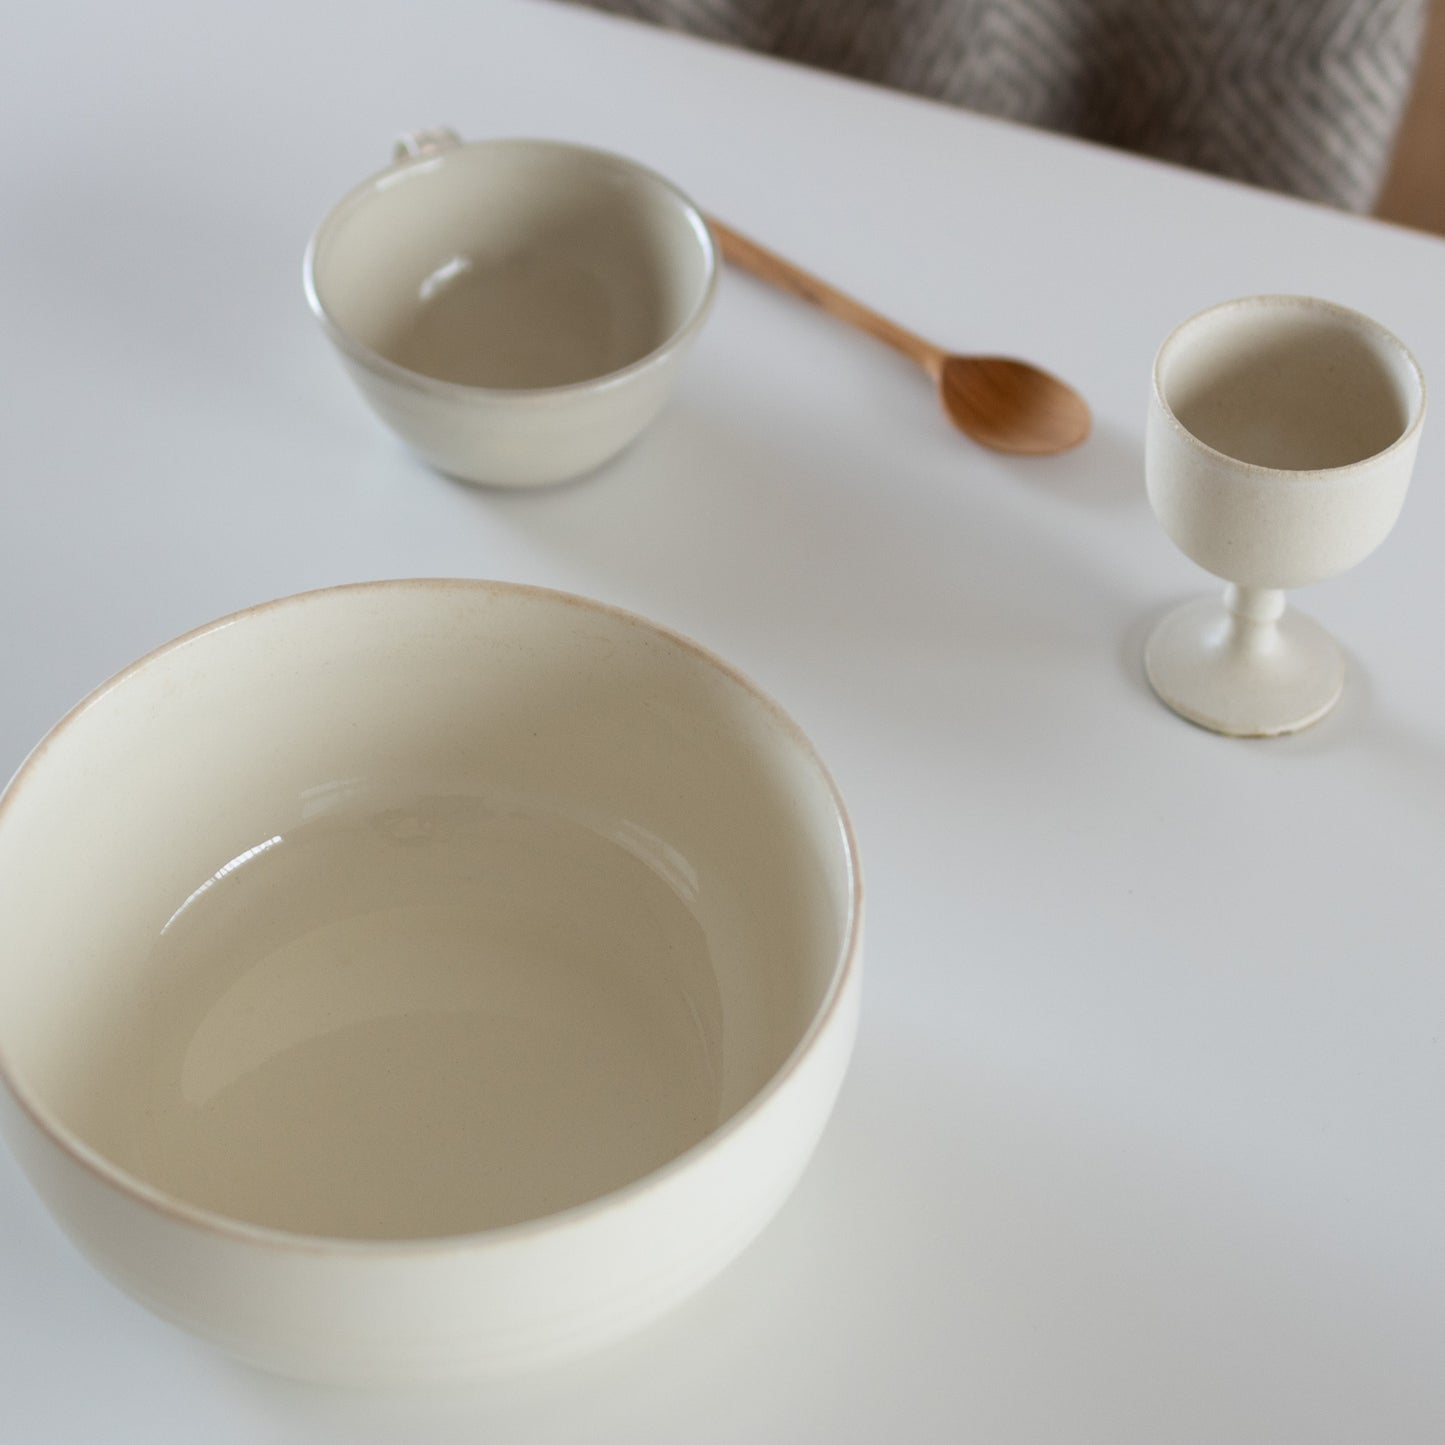 unknown(名称不明) bowl / arabia (アラビア)